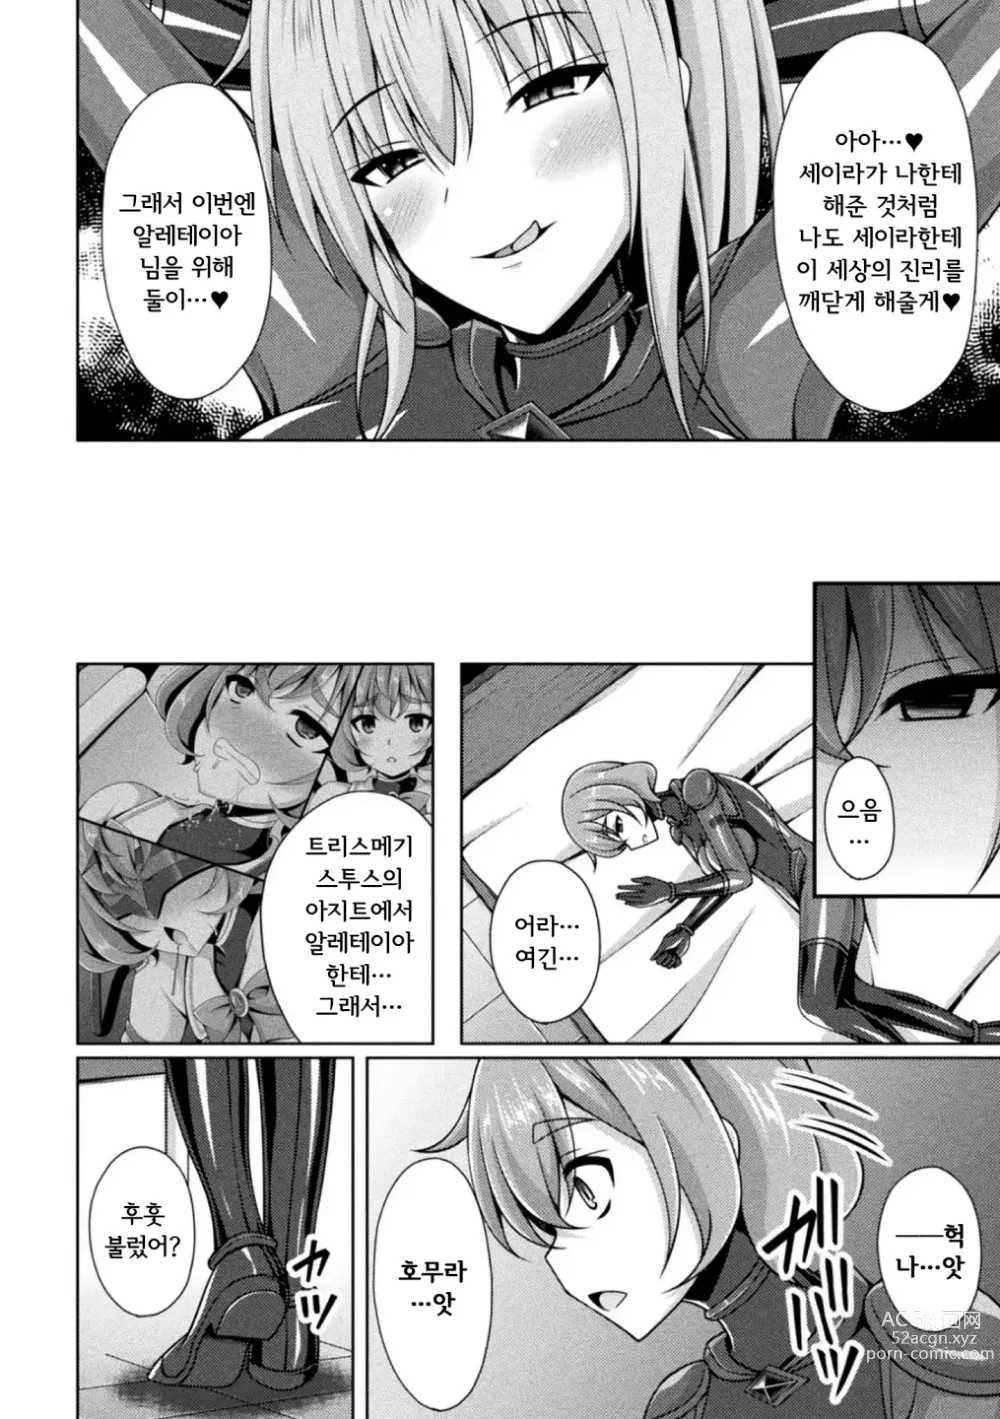 Page 2 of manga 황옥천희 글리터 스타즈 ep4. 전파되는 악의, 재탄생!! 사영예희